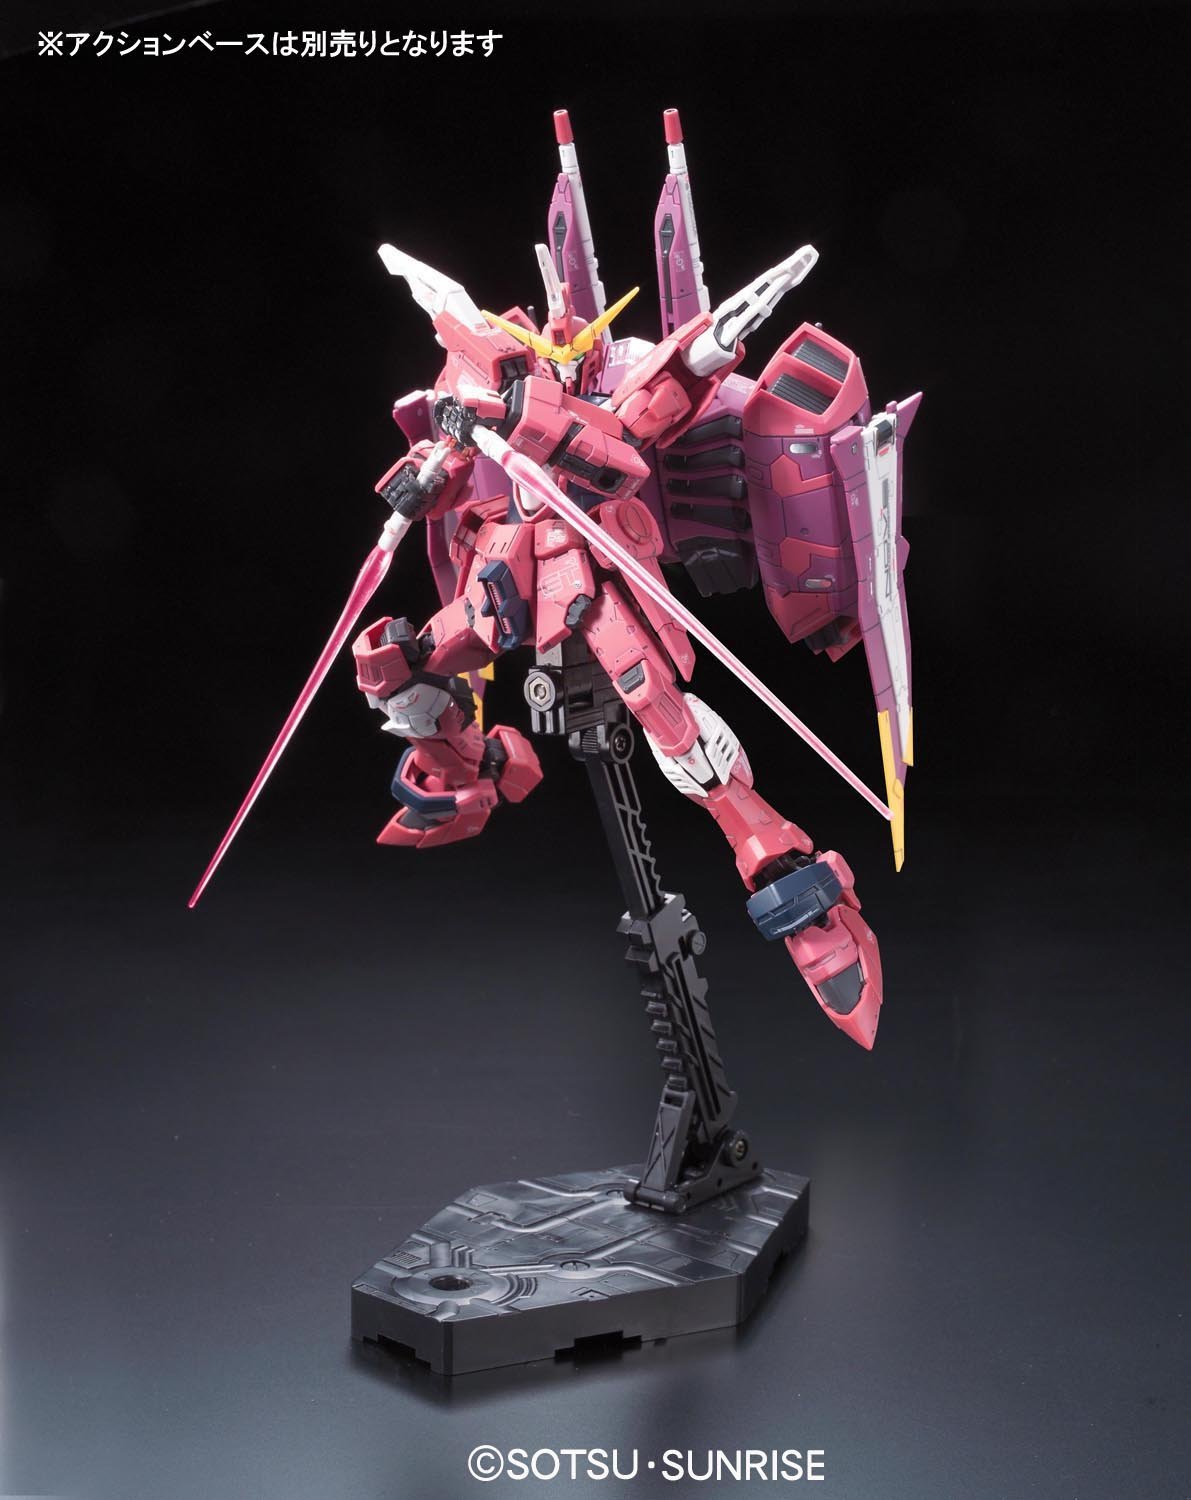 RG - ZGMF-X09A Justice Gundam